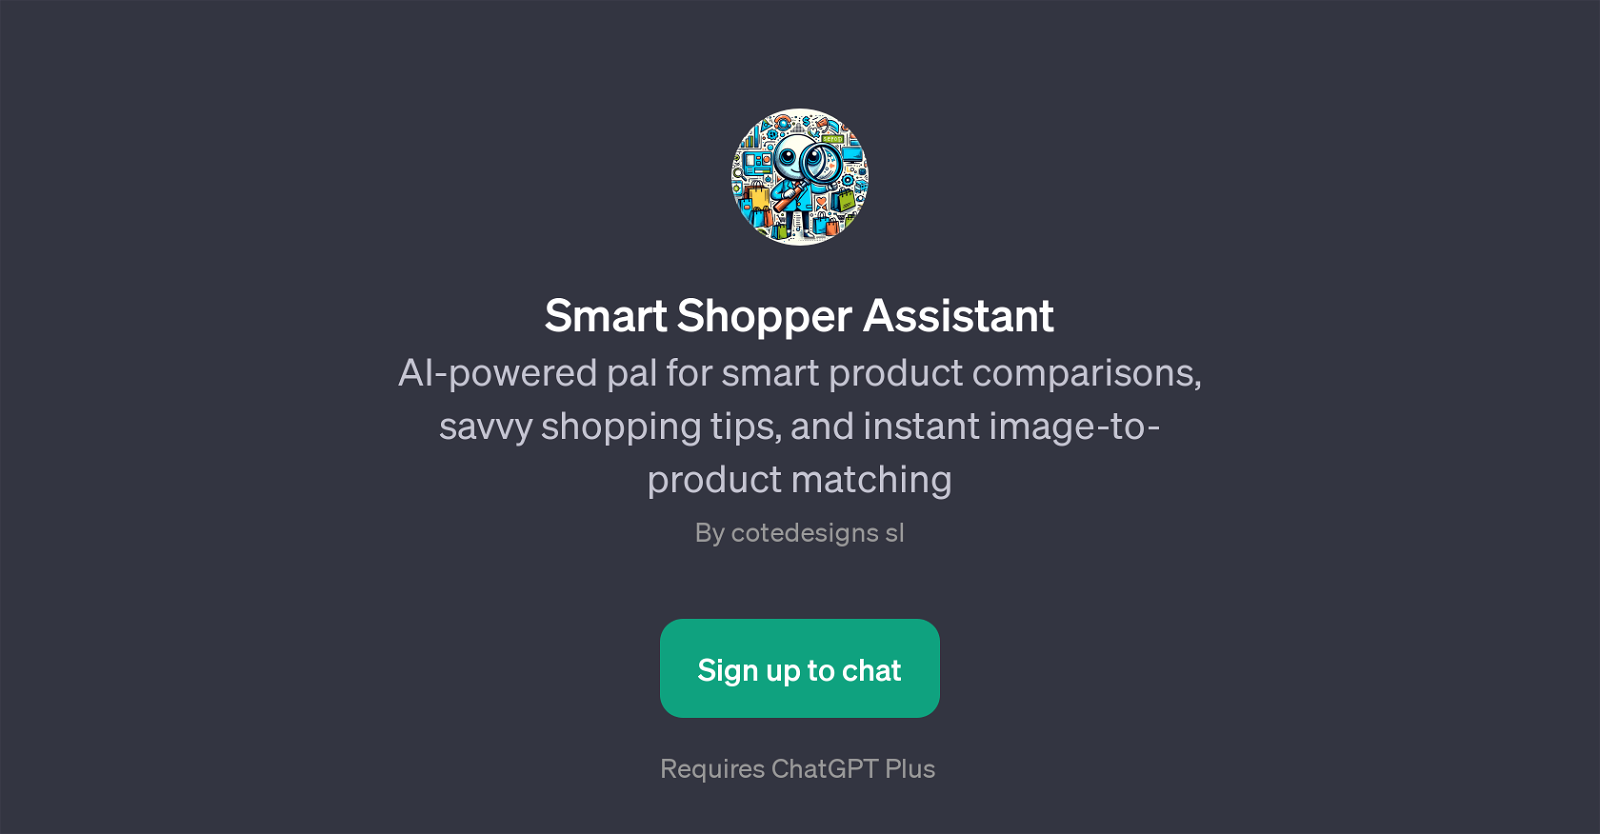 Smart Shopper Assistant website